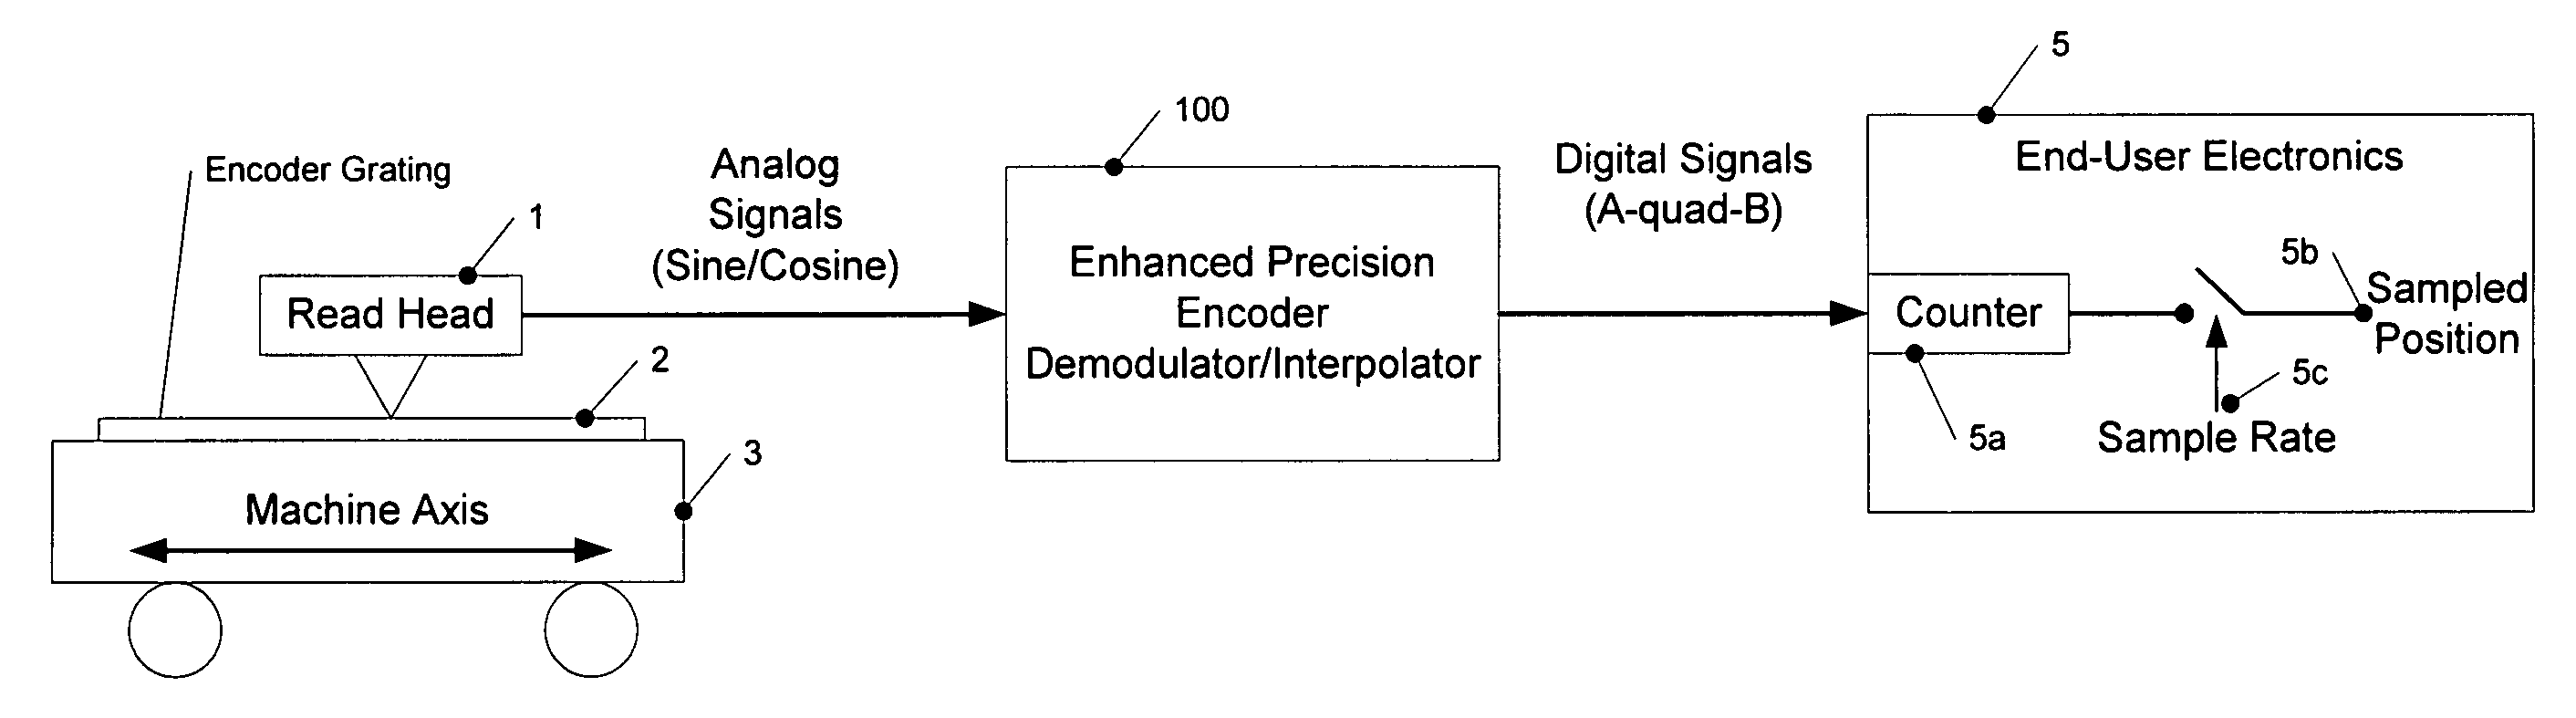 Encoder interpolator with enhanced precision